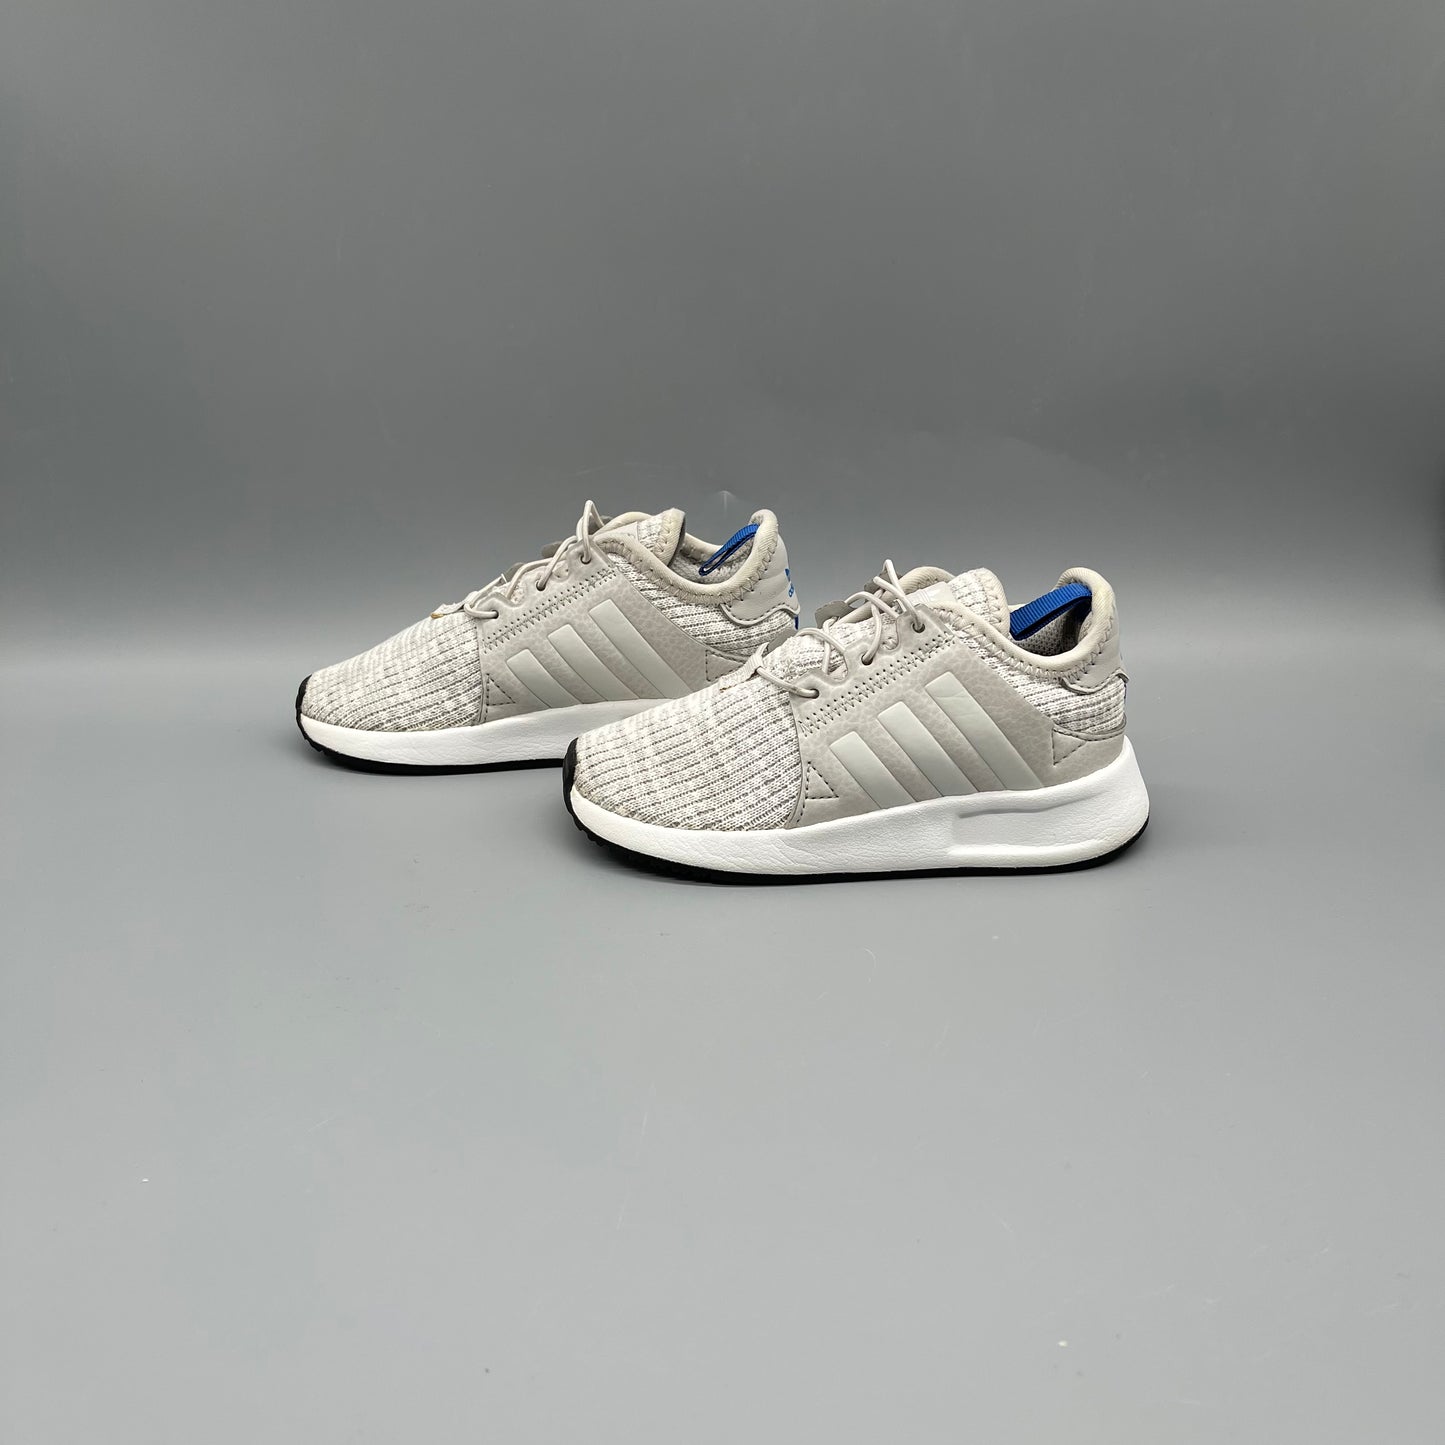 Adidas / Runner / US8